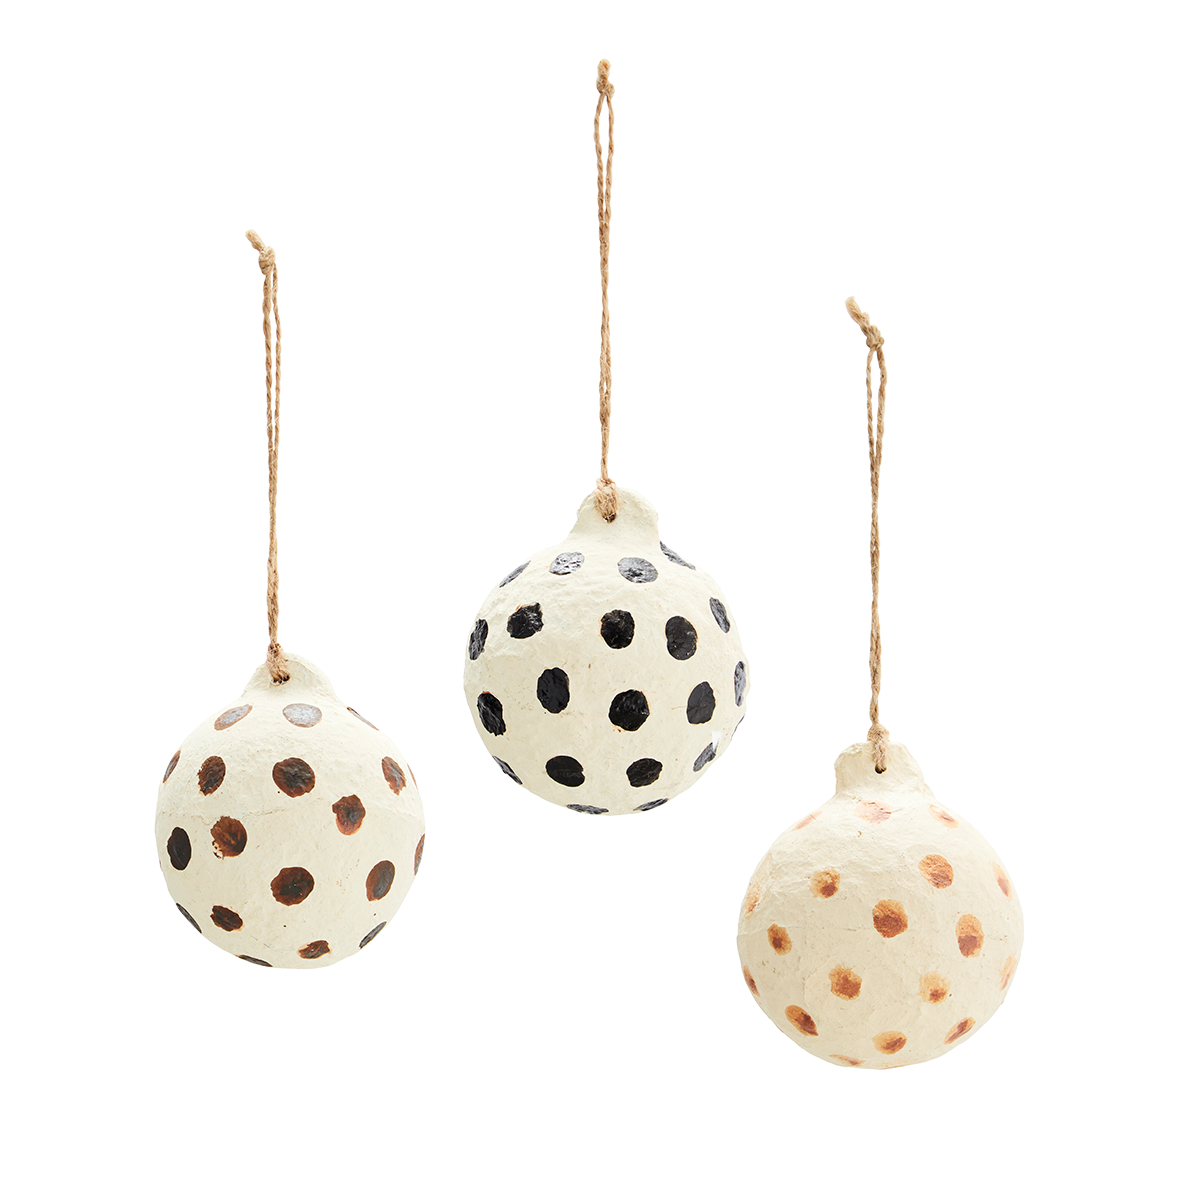 Handmade paper pulp balls w/ dots